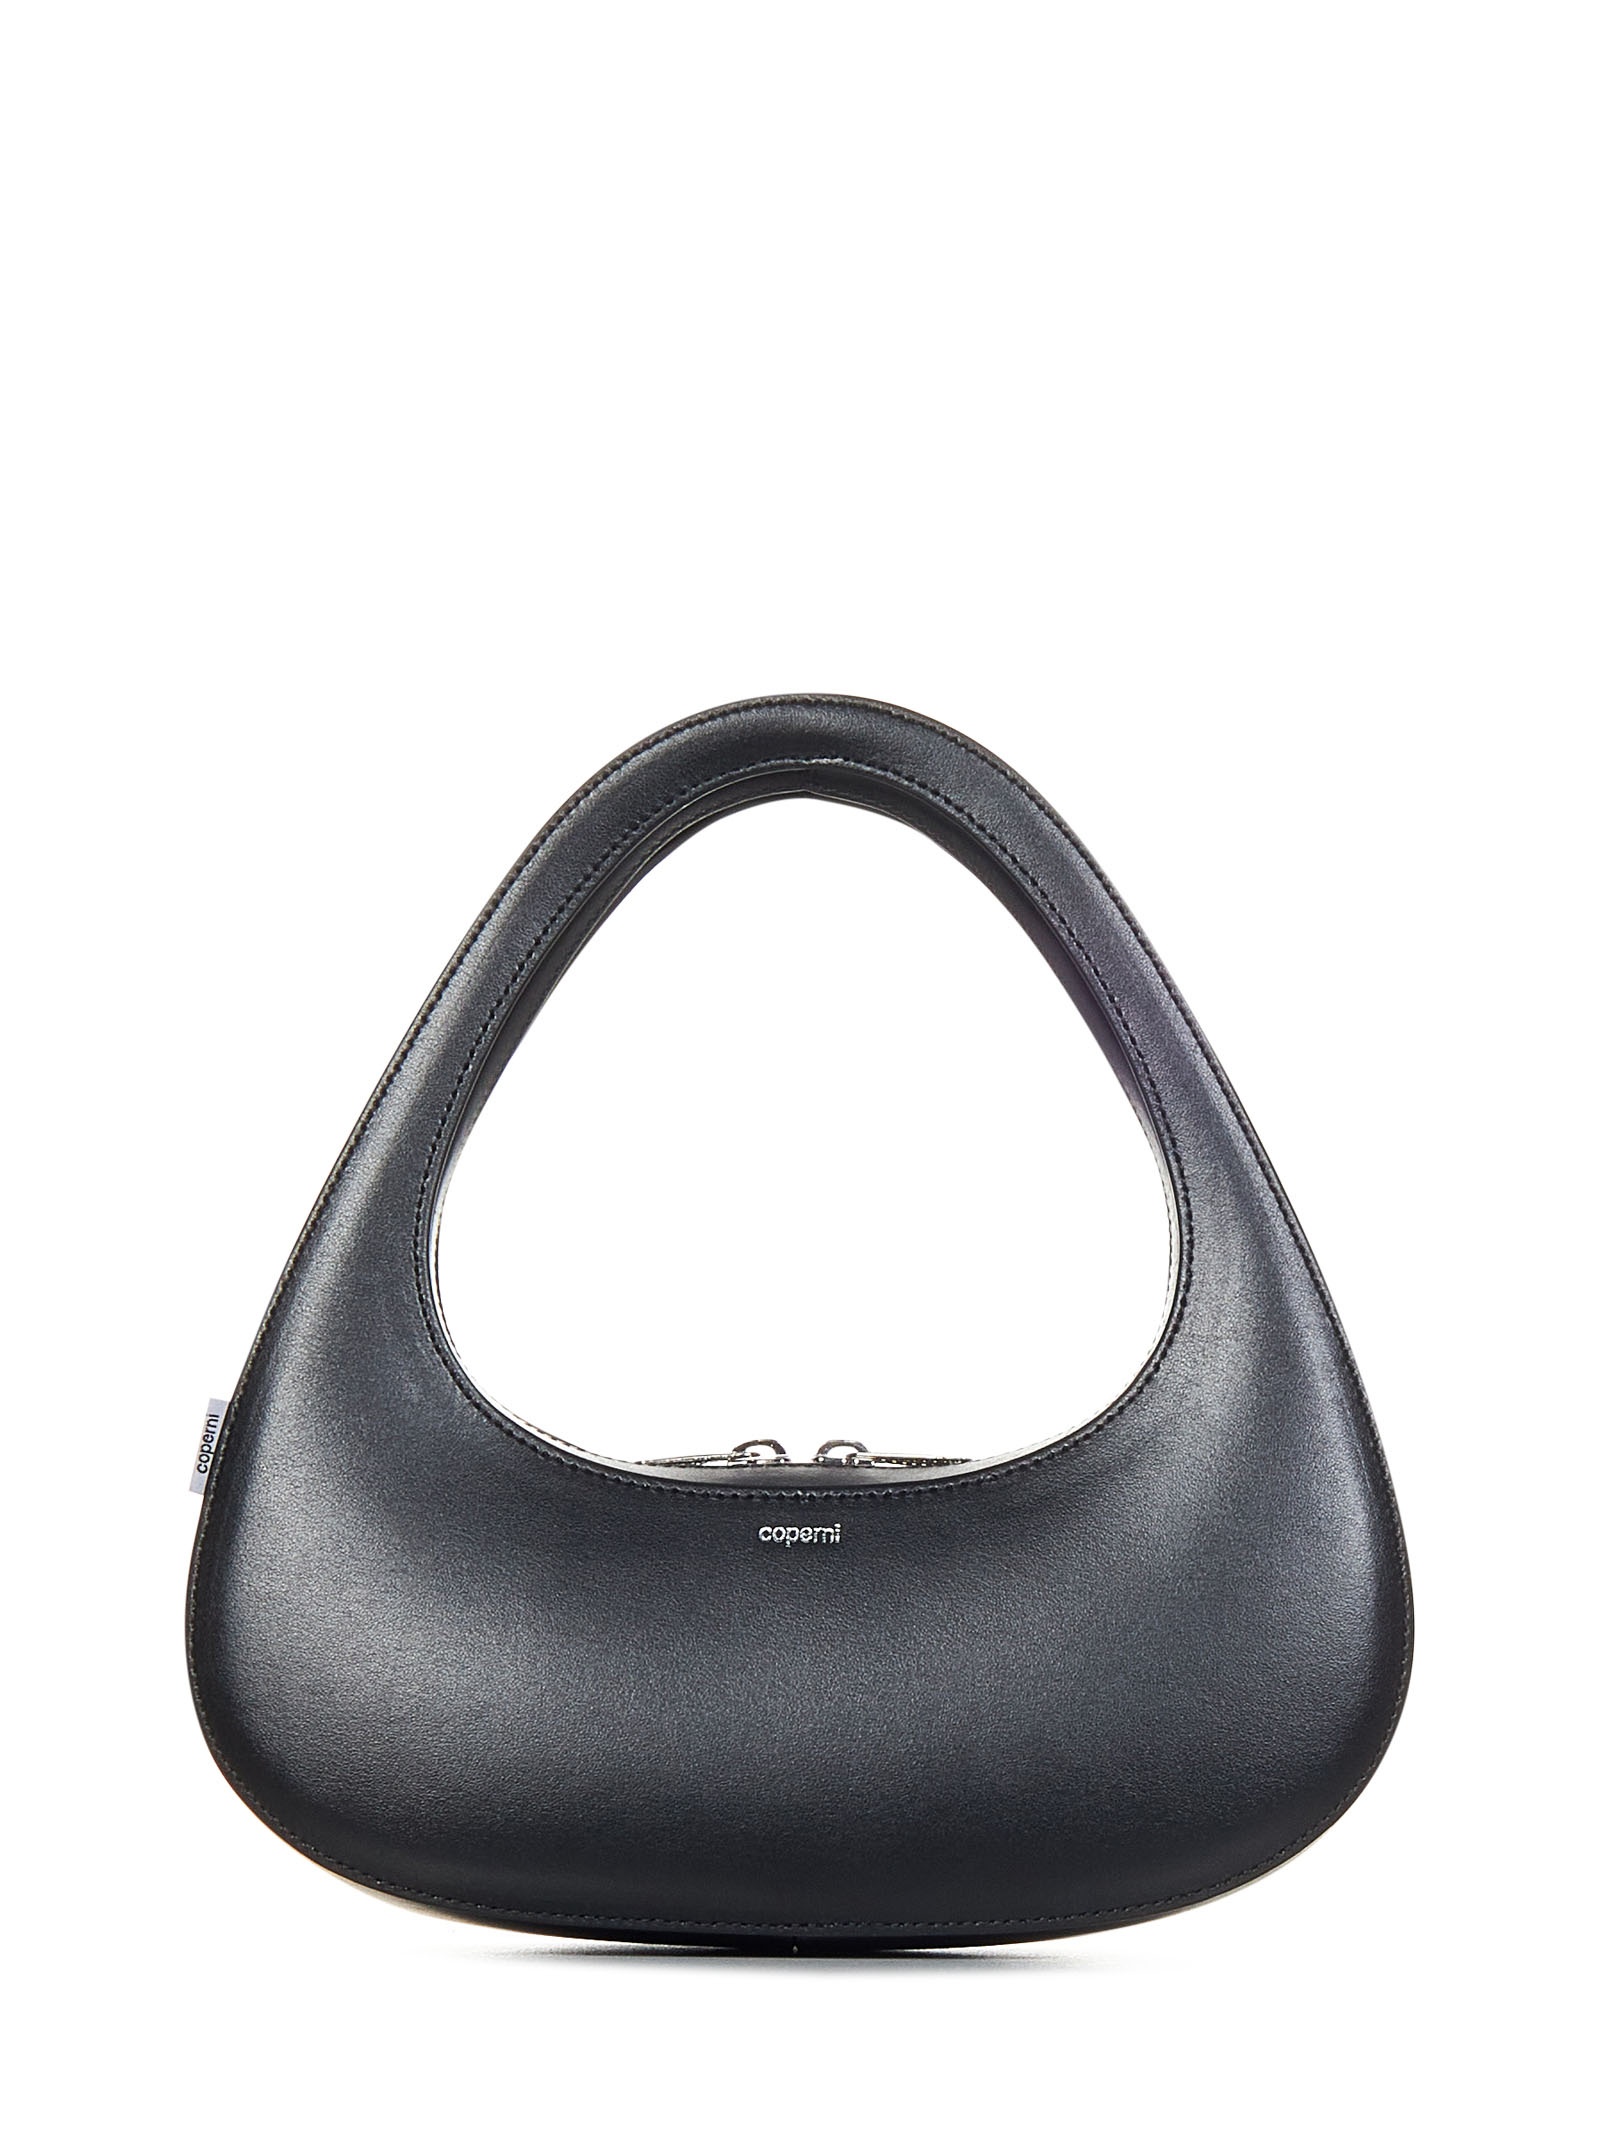 Black calfskin curved triangular baguette bag with silver-foil print logo at front. - 1